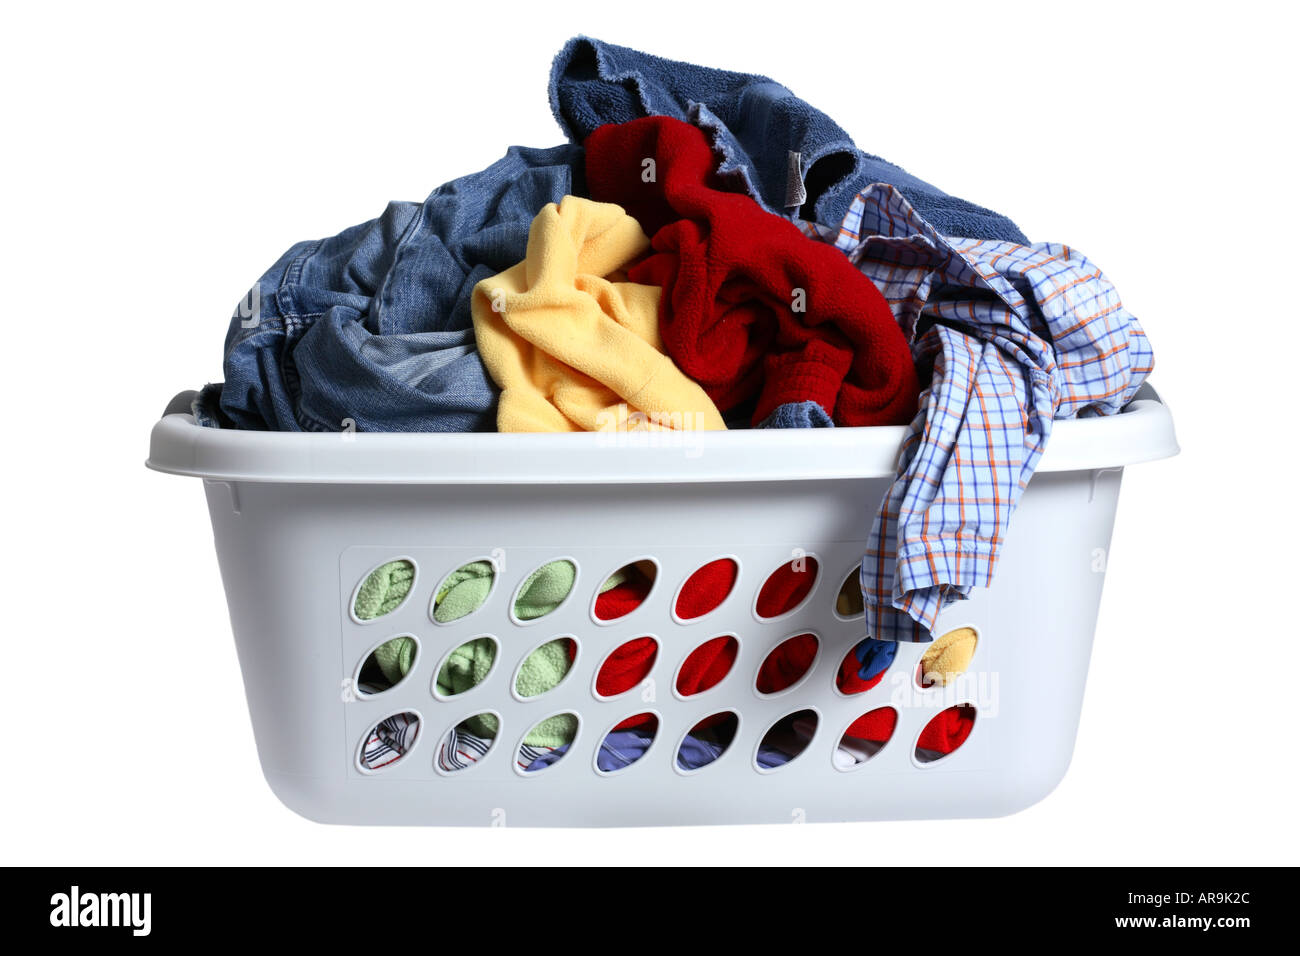 Full Laundry Basket